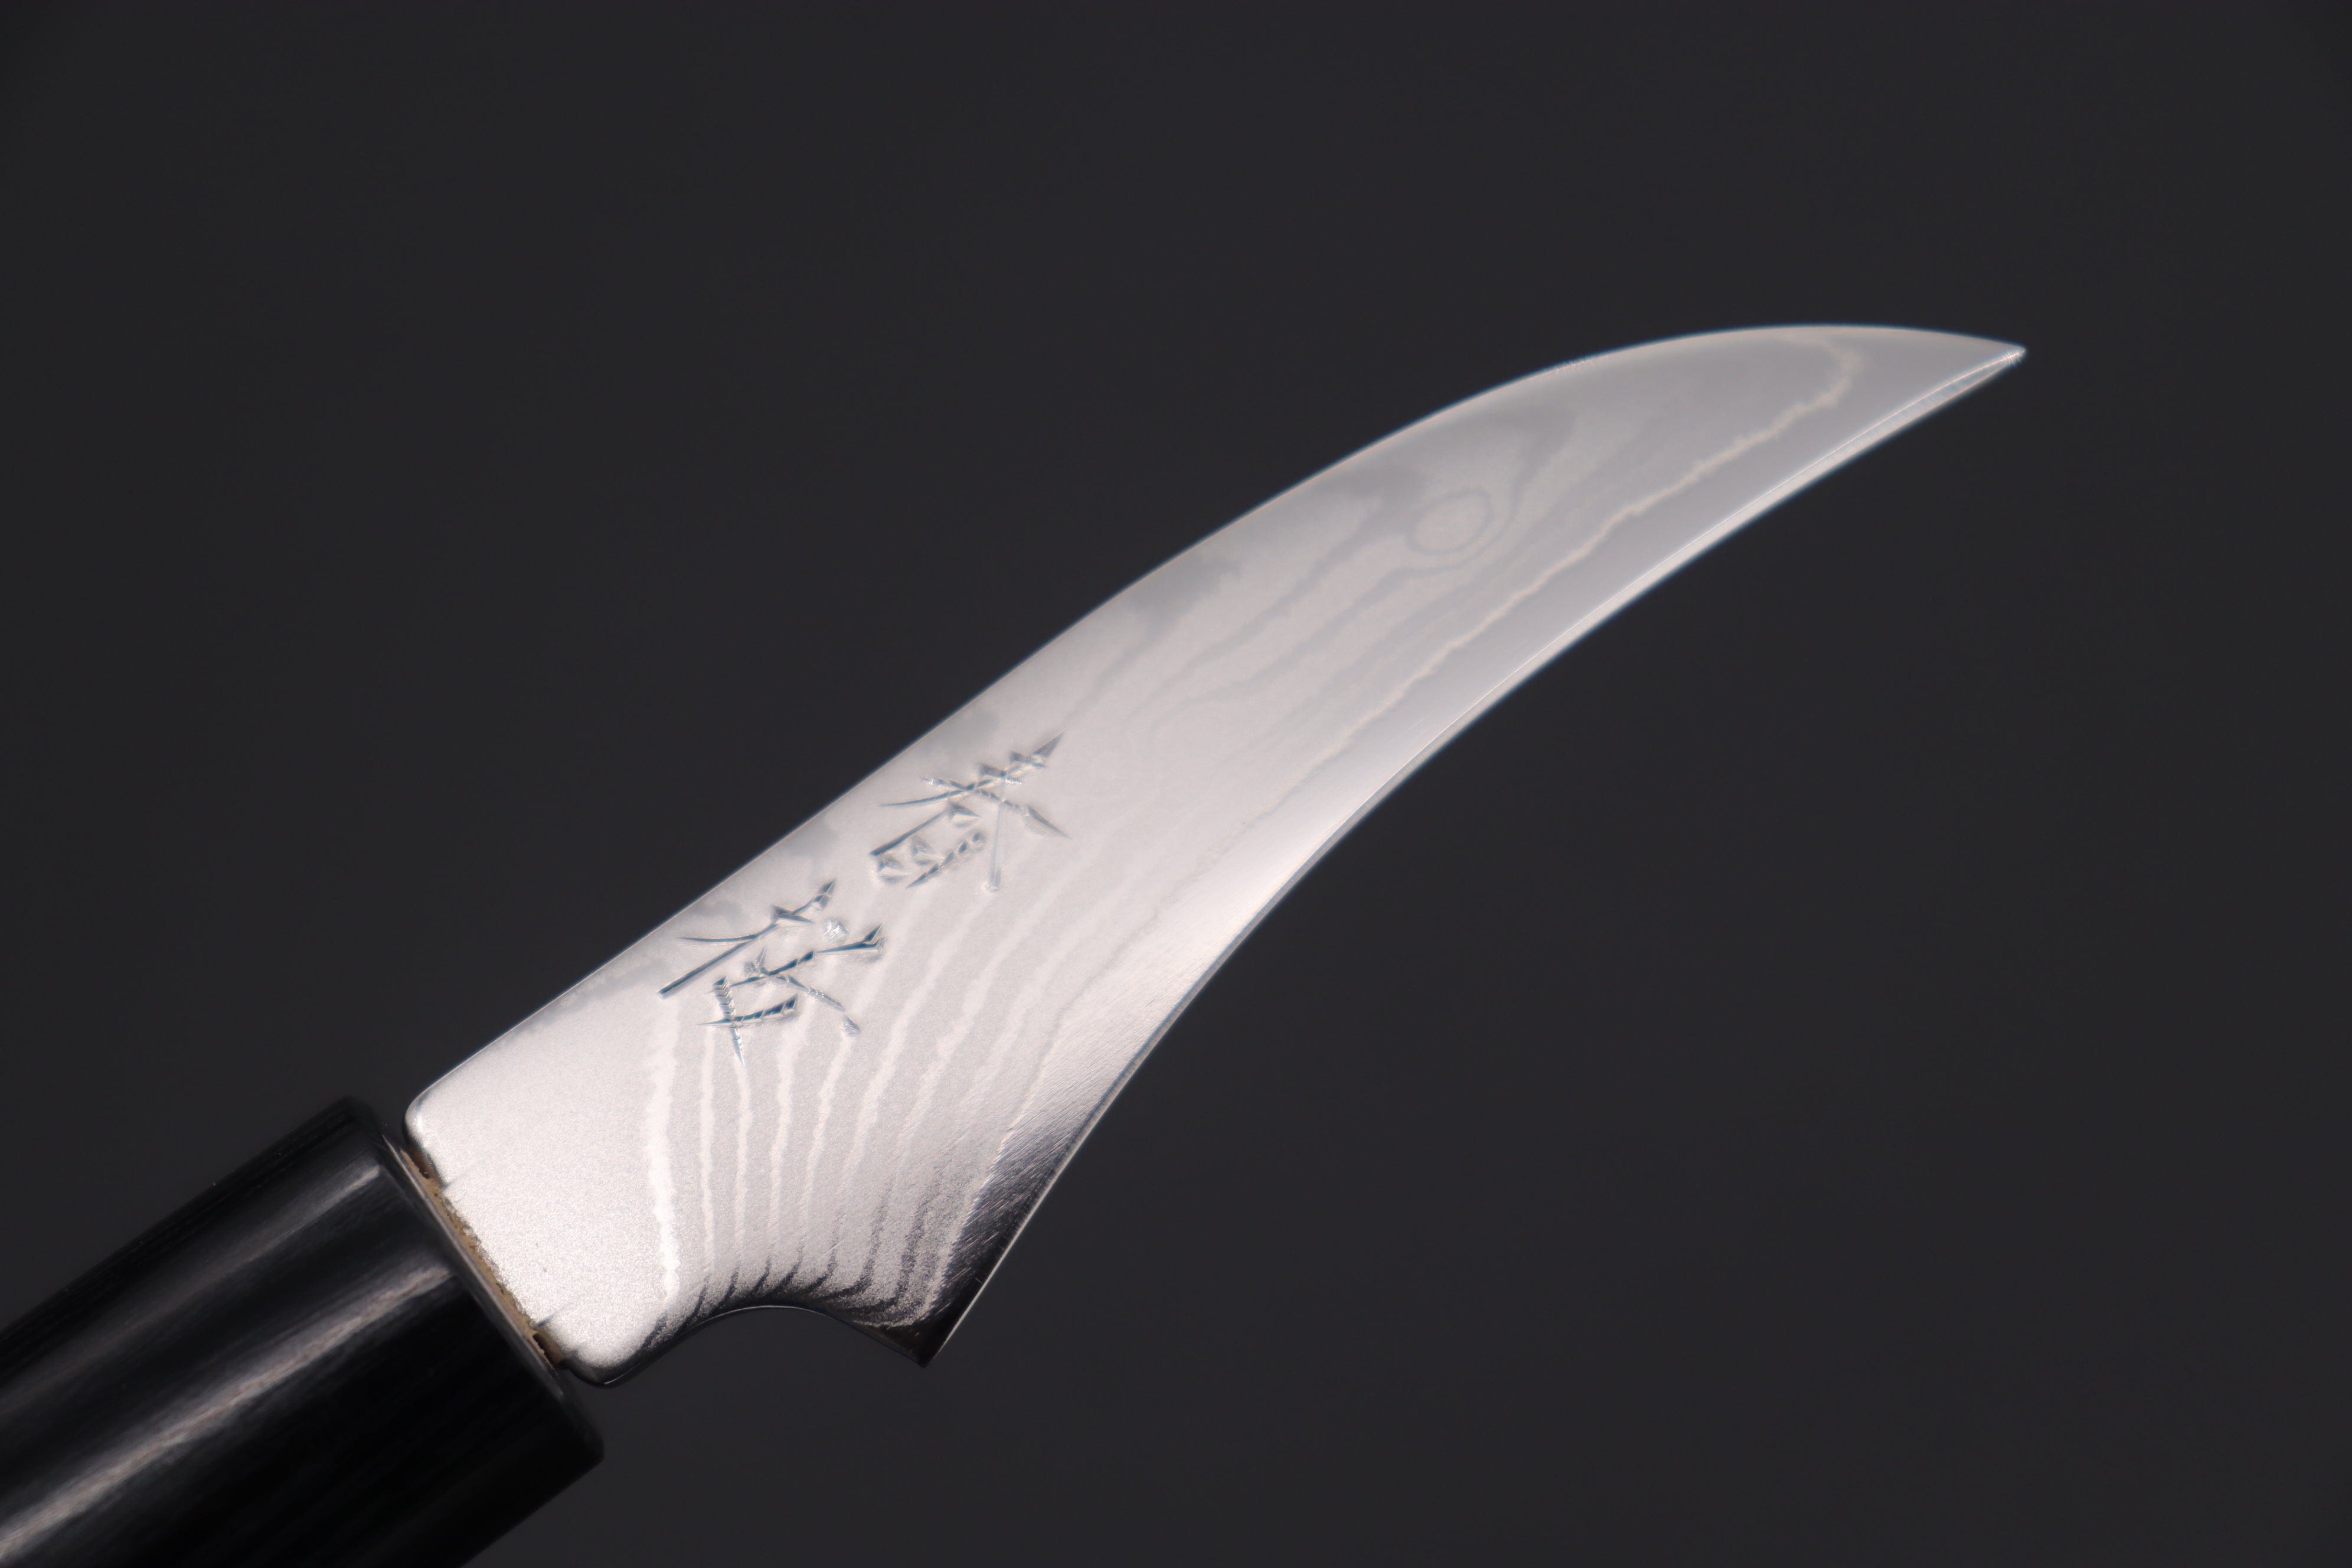 Sakura Chef's Knife